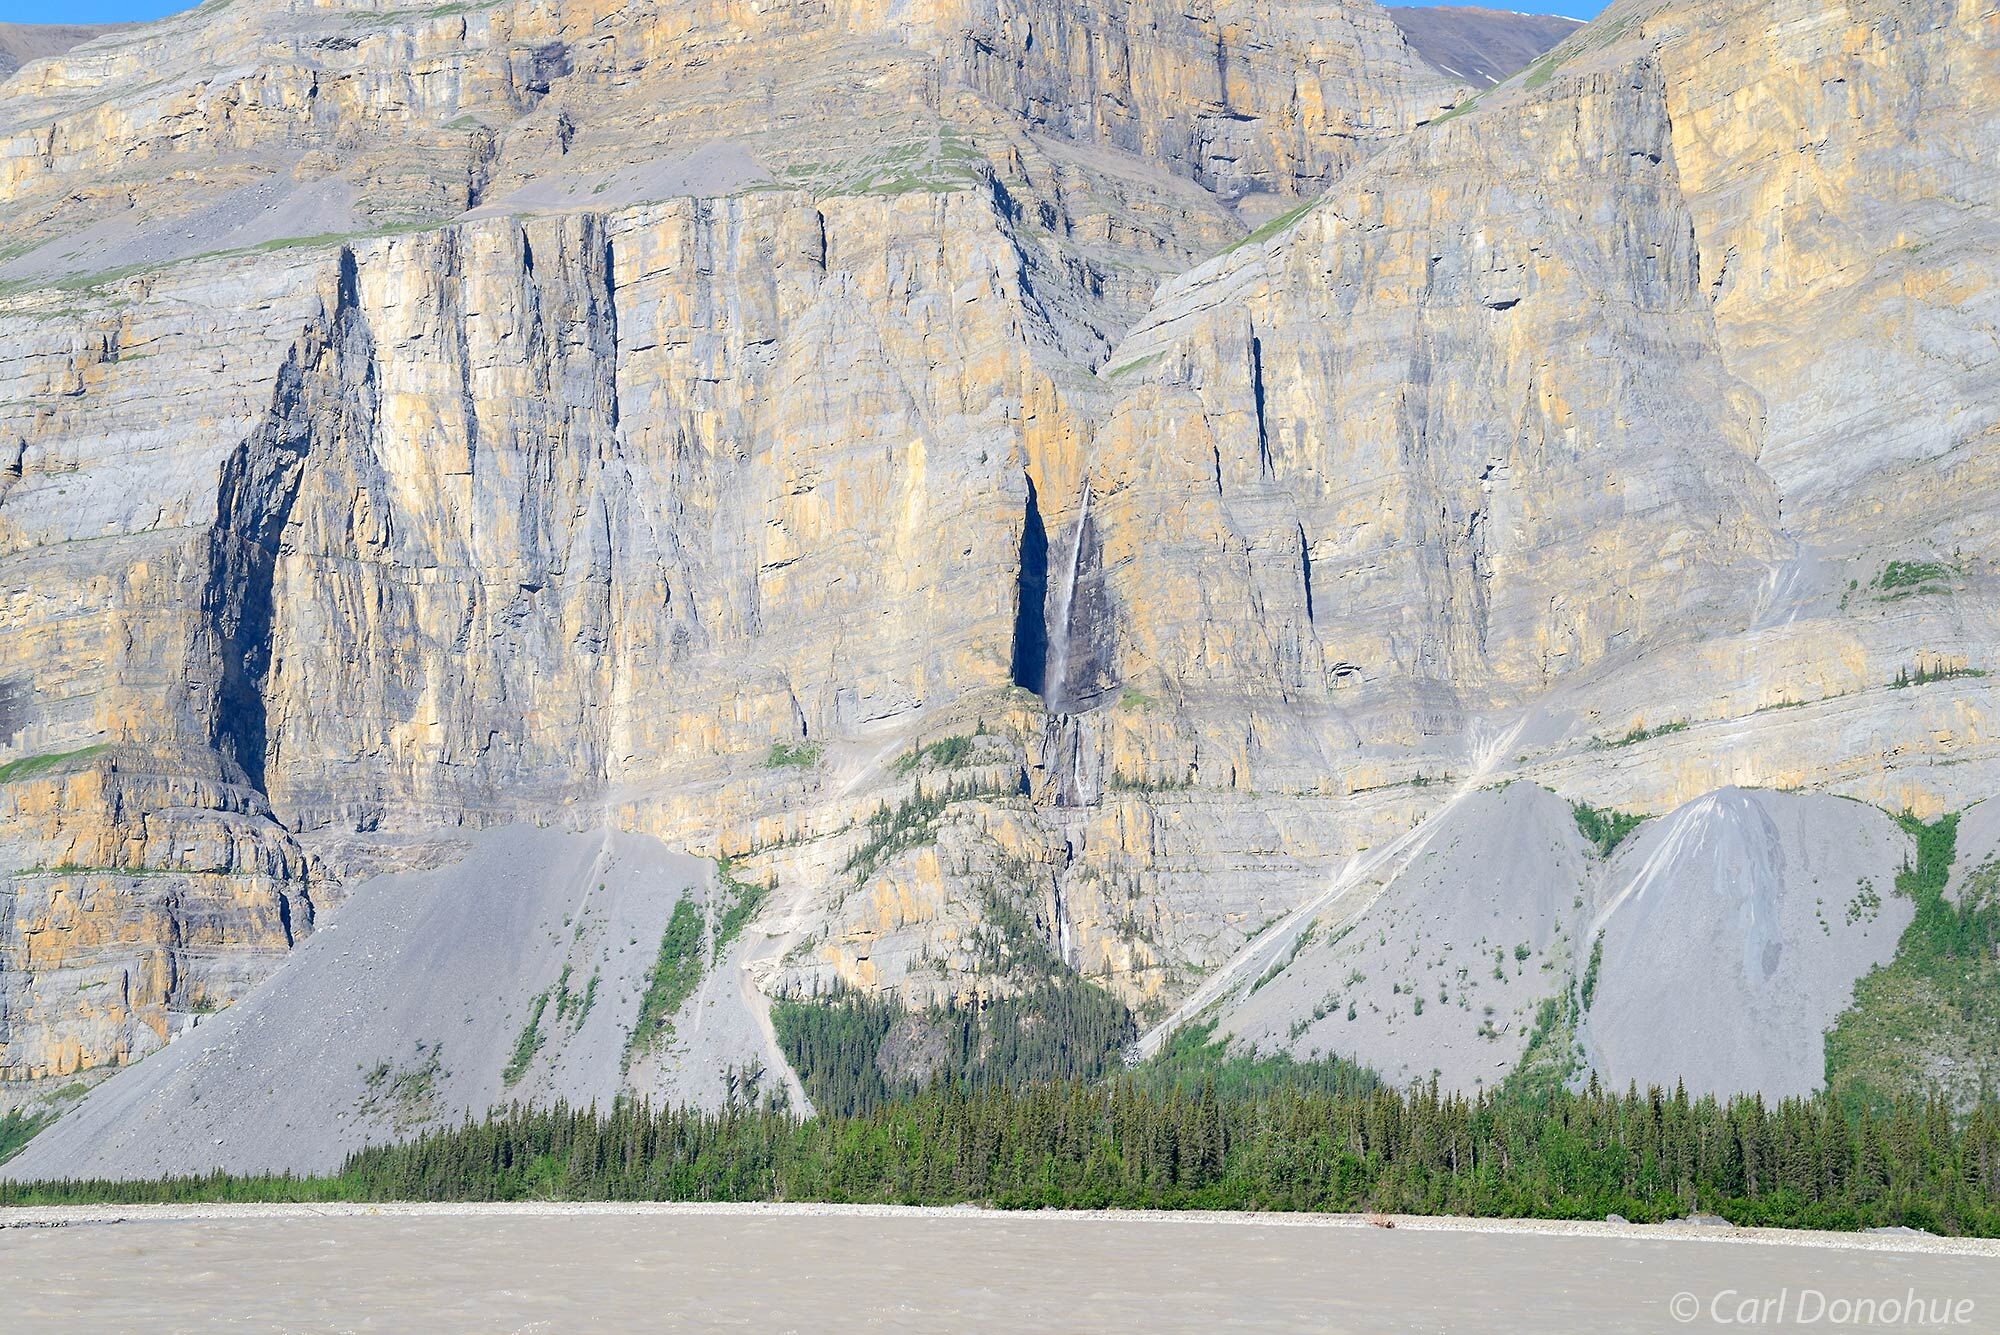 Nizina River, the Mile High Cliffs, which are limestone cliffs, Wrangell - St. Elias National Park & Preserve, Alaska.